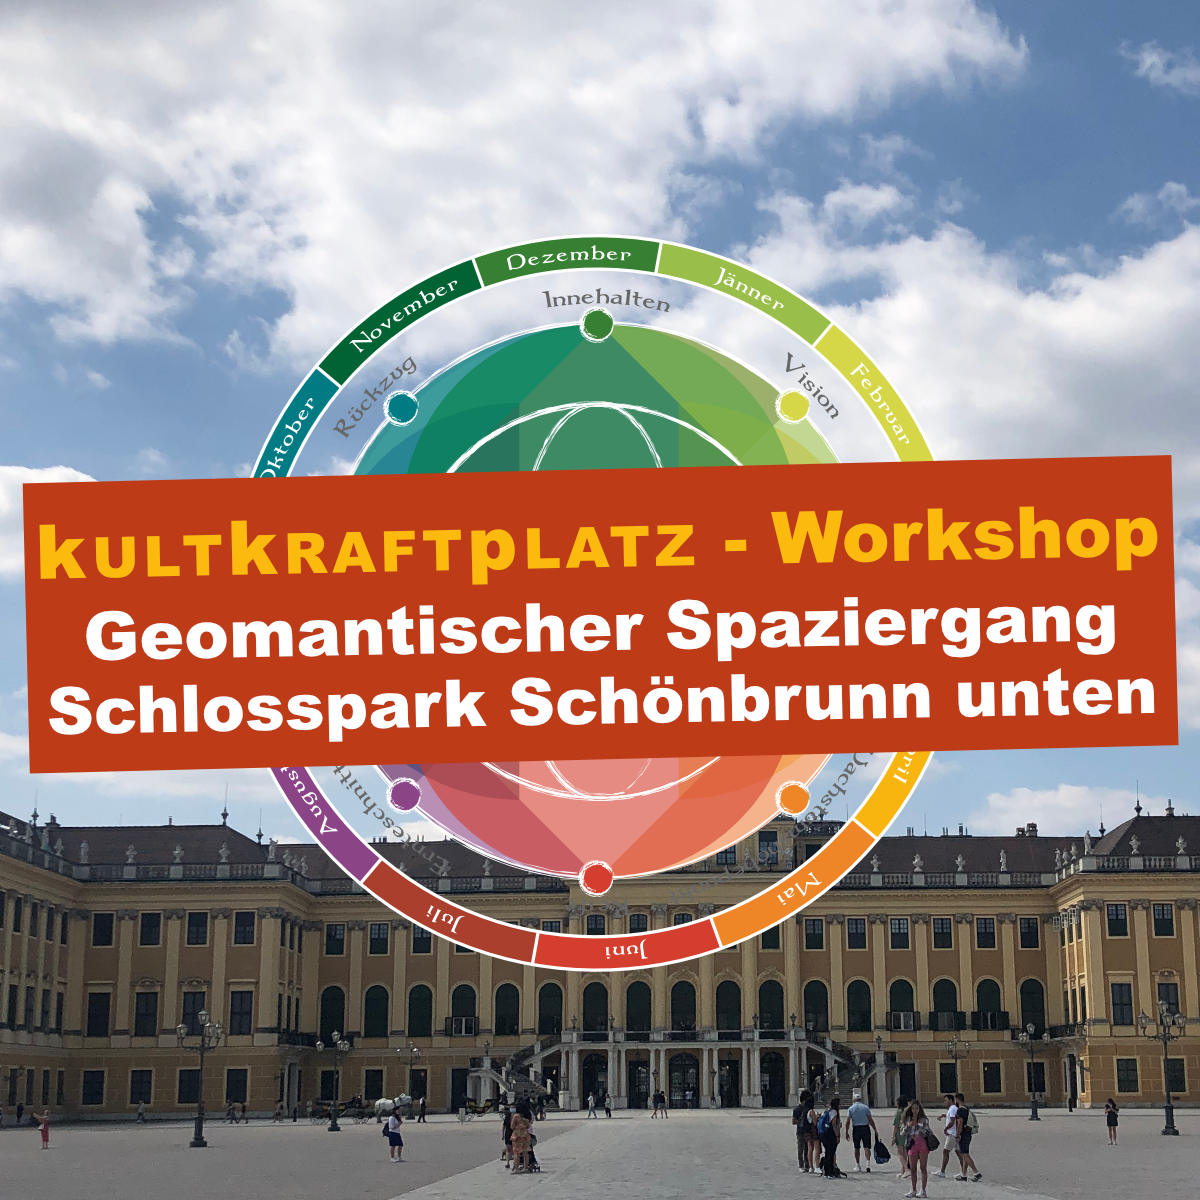 KKP SchoenbrunnUnten - Die Praxismodule